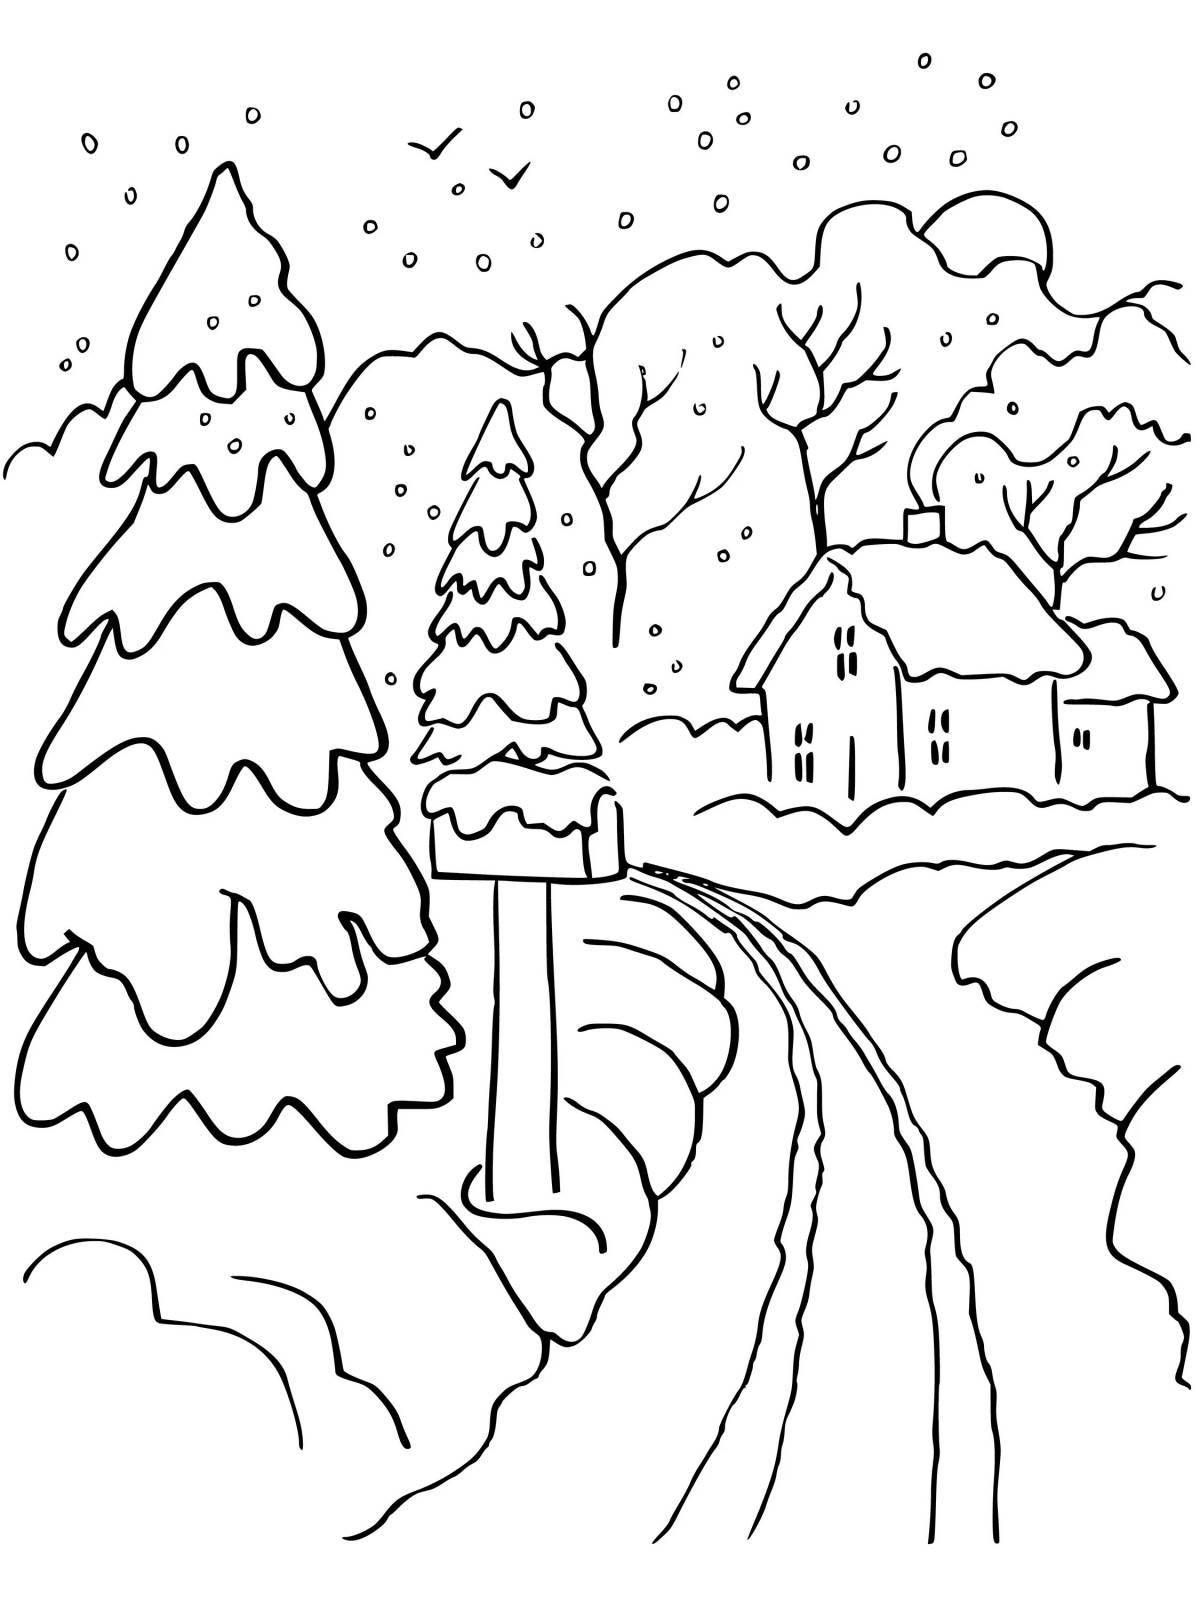 Majestic winter landscape coloring book for kids